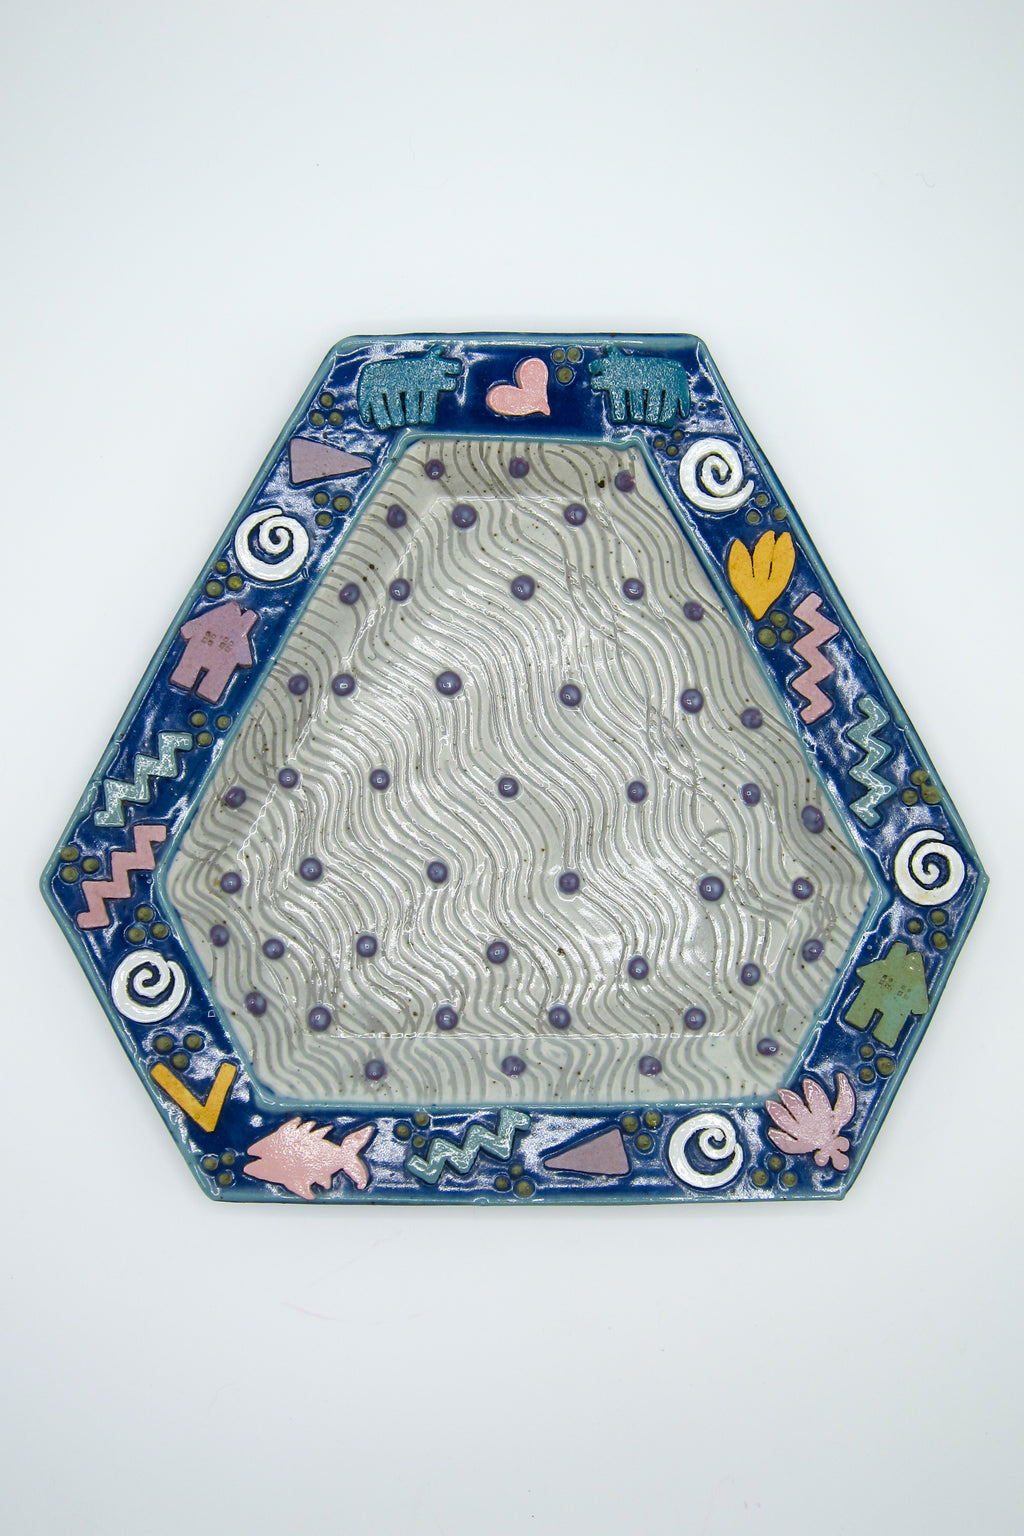 Memphis Style Ceramic Art Plate